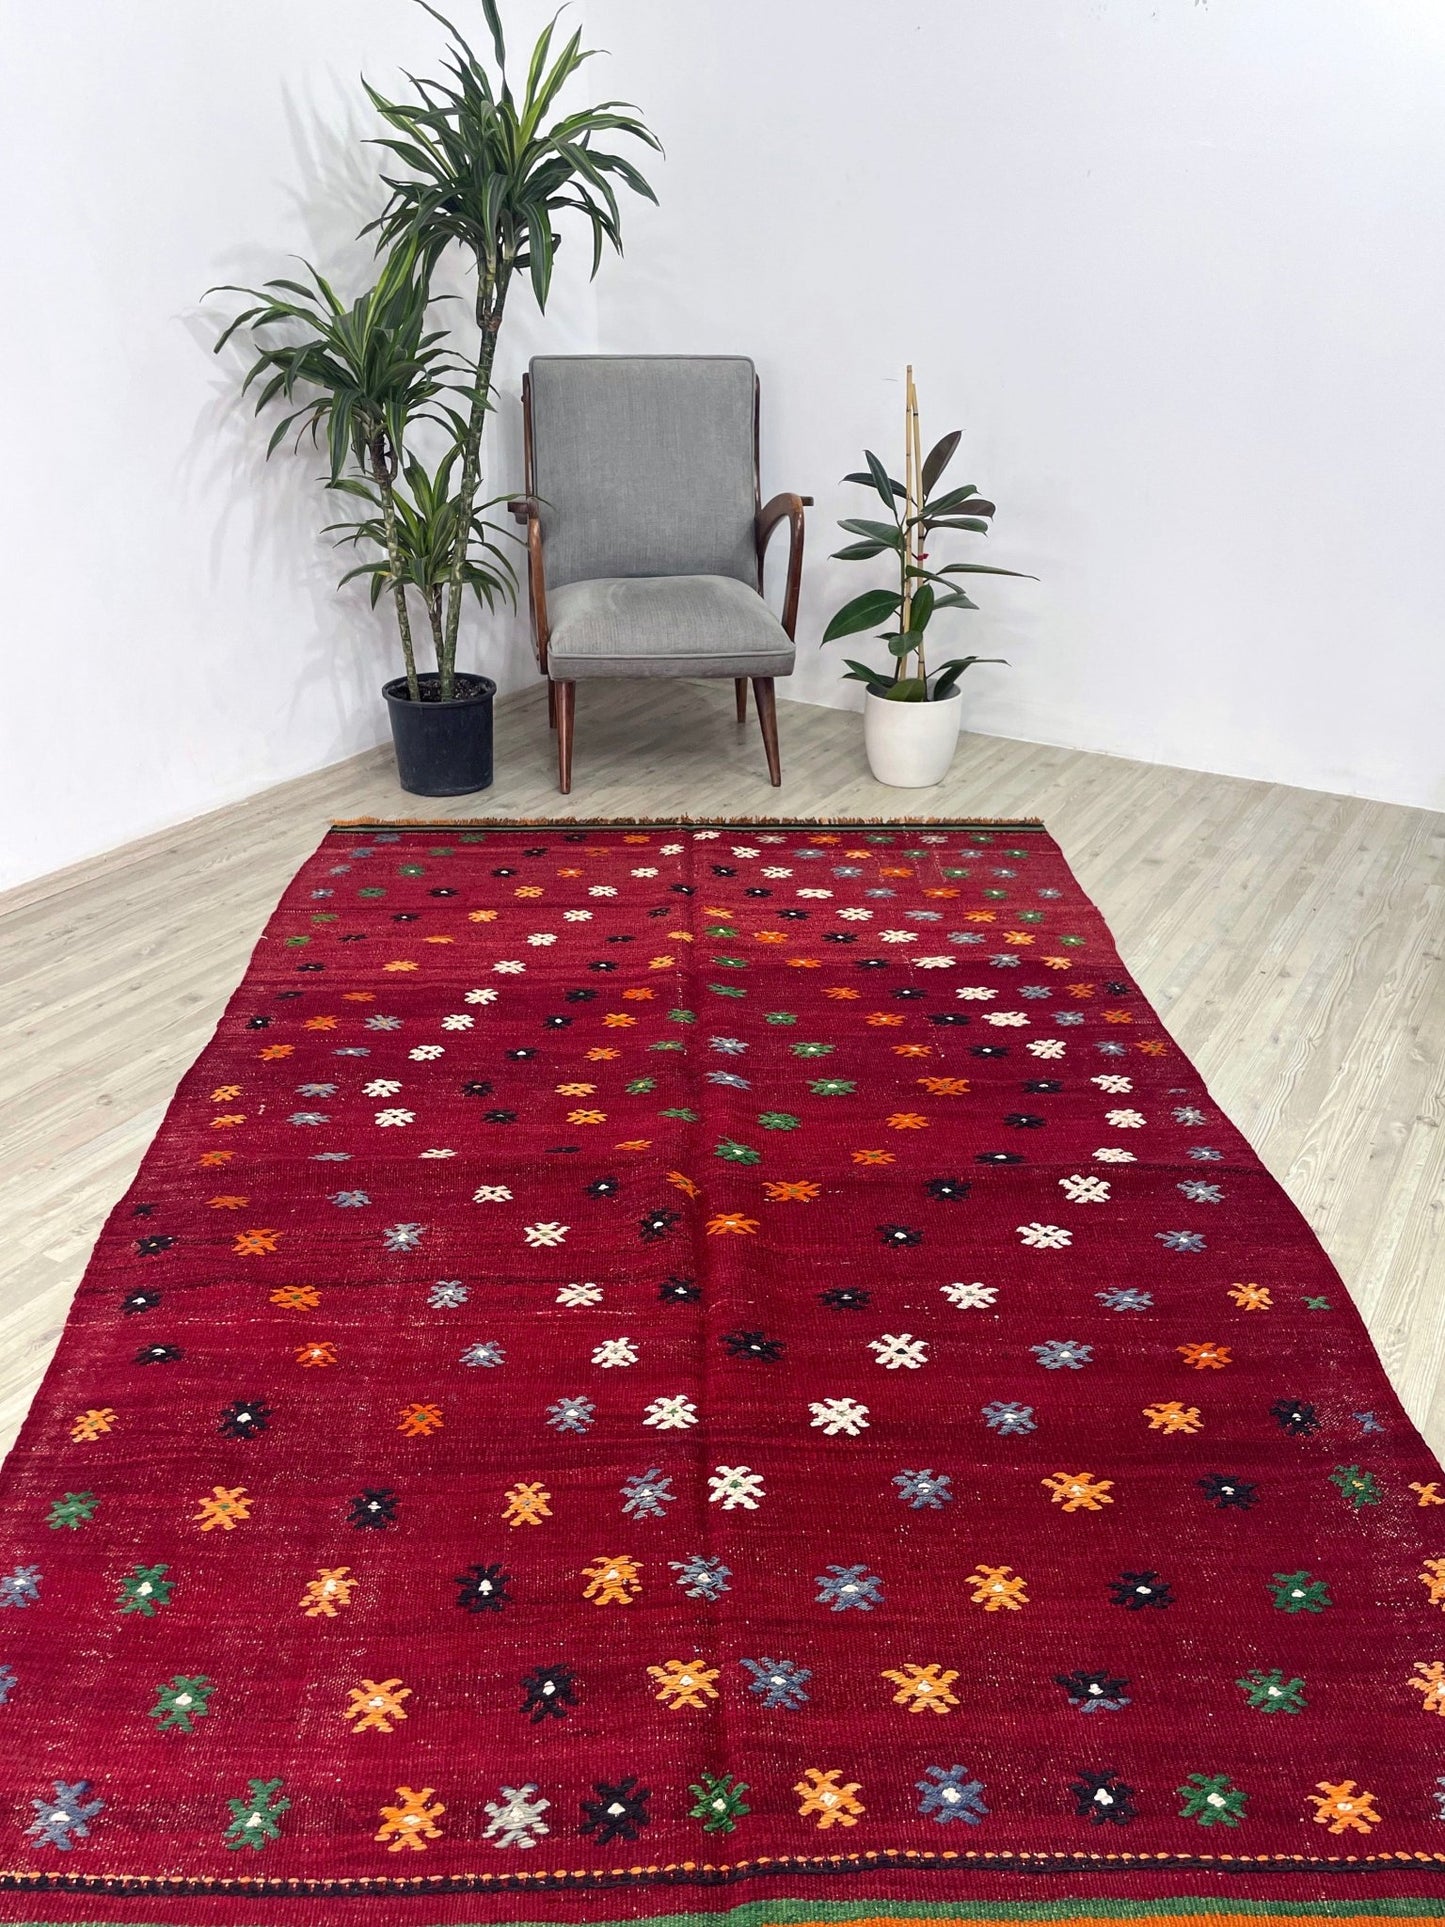 pergamum turkish kilim rug shop san francisco bay area berkeley palo alto but rug online shopping